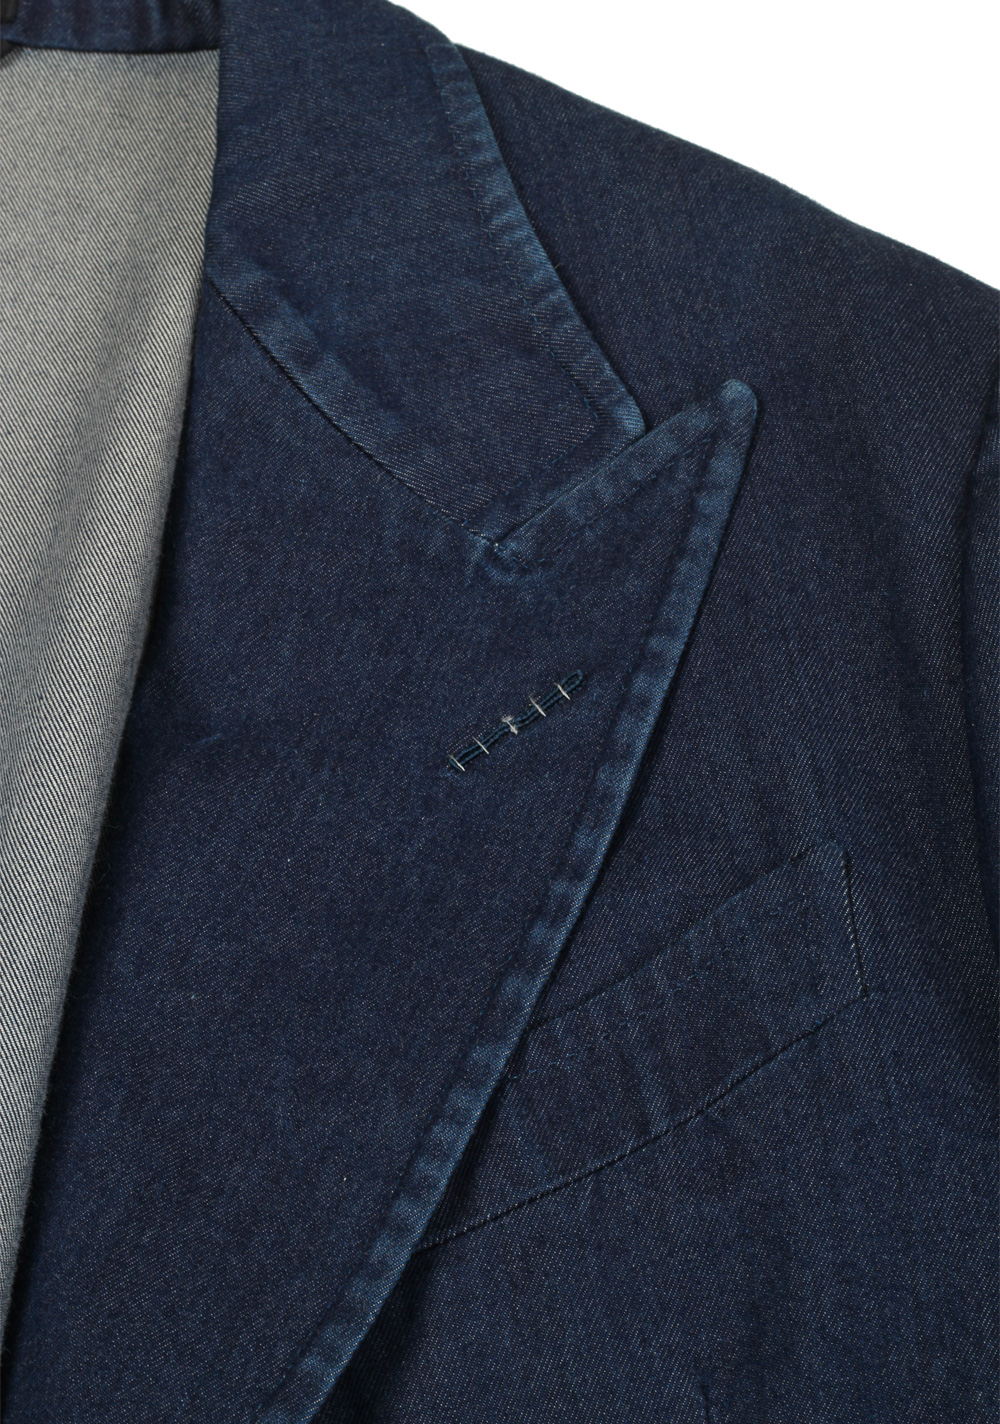 TOM FORD Shelton Blue Denim Sport Coat Size 48 / 38R U.S. | Costume Limité